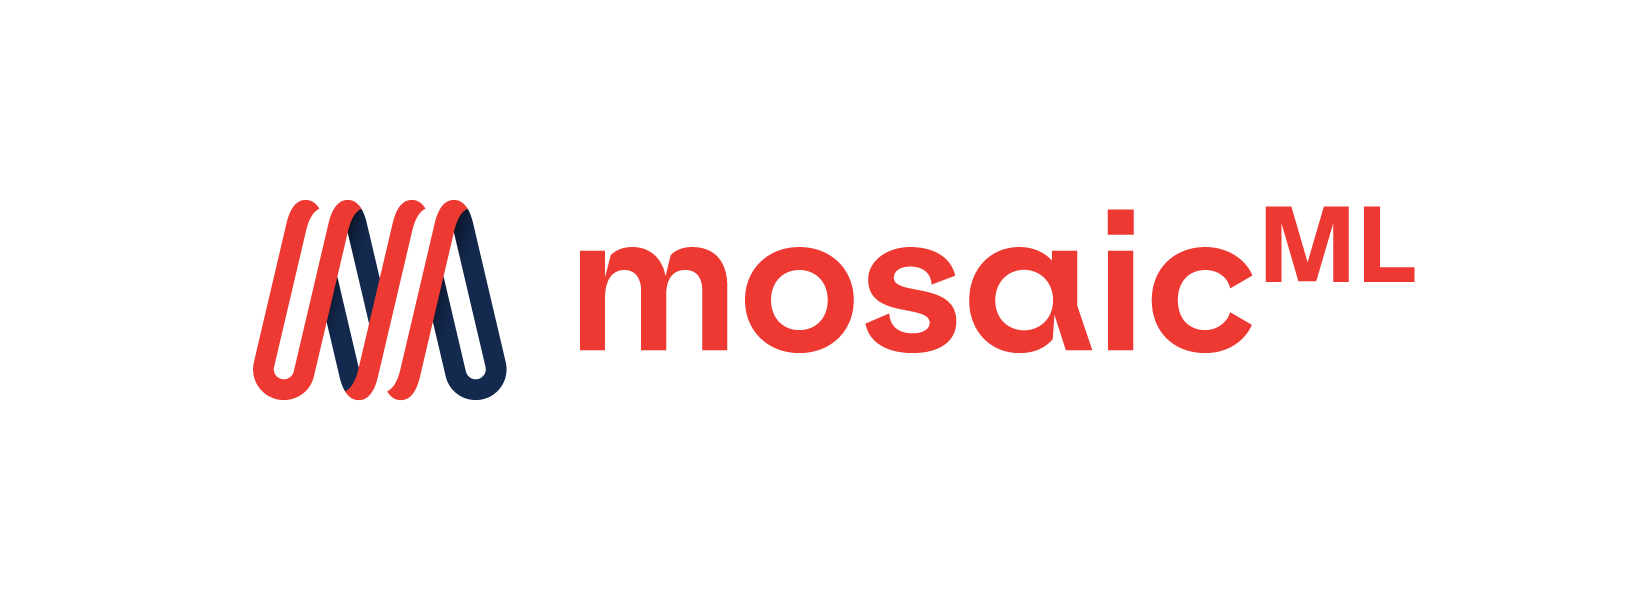 mosaicml-logo-light-mode